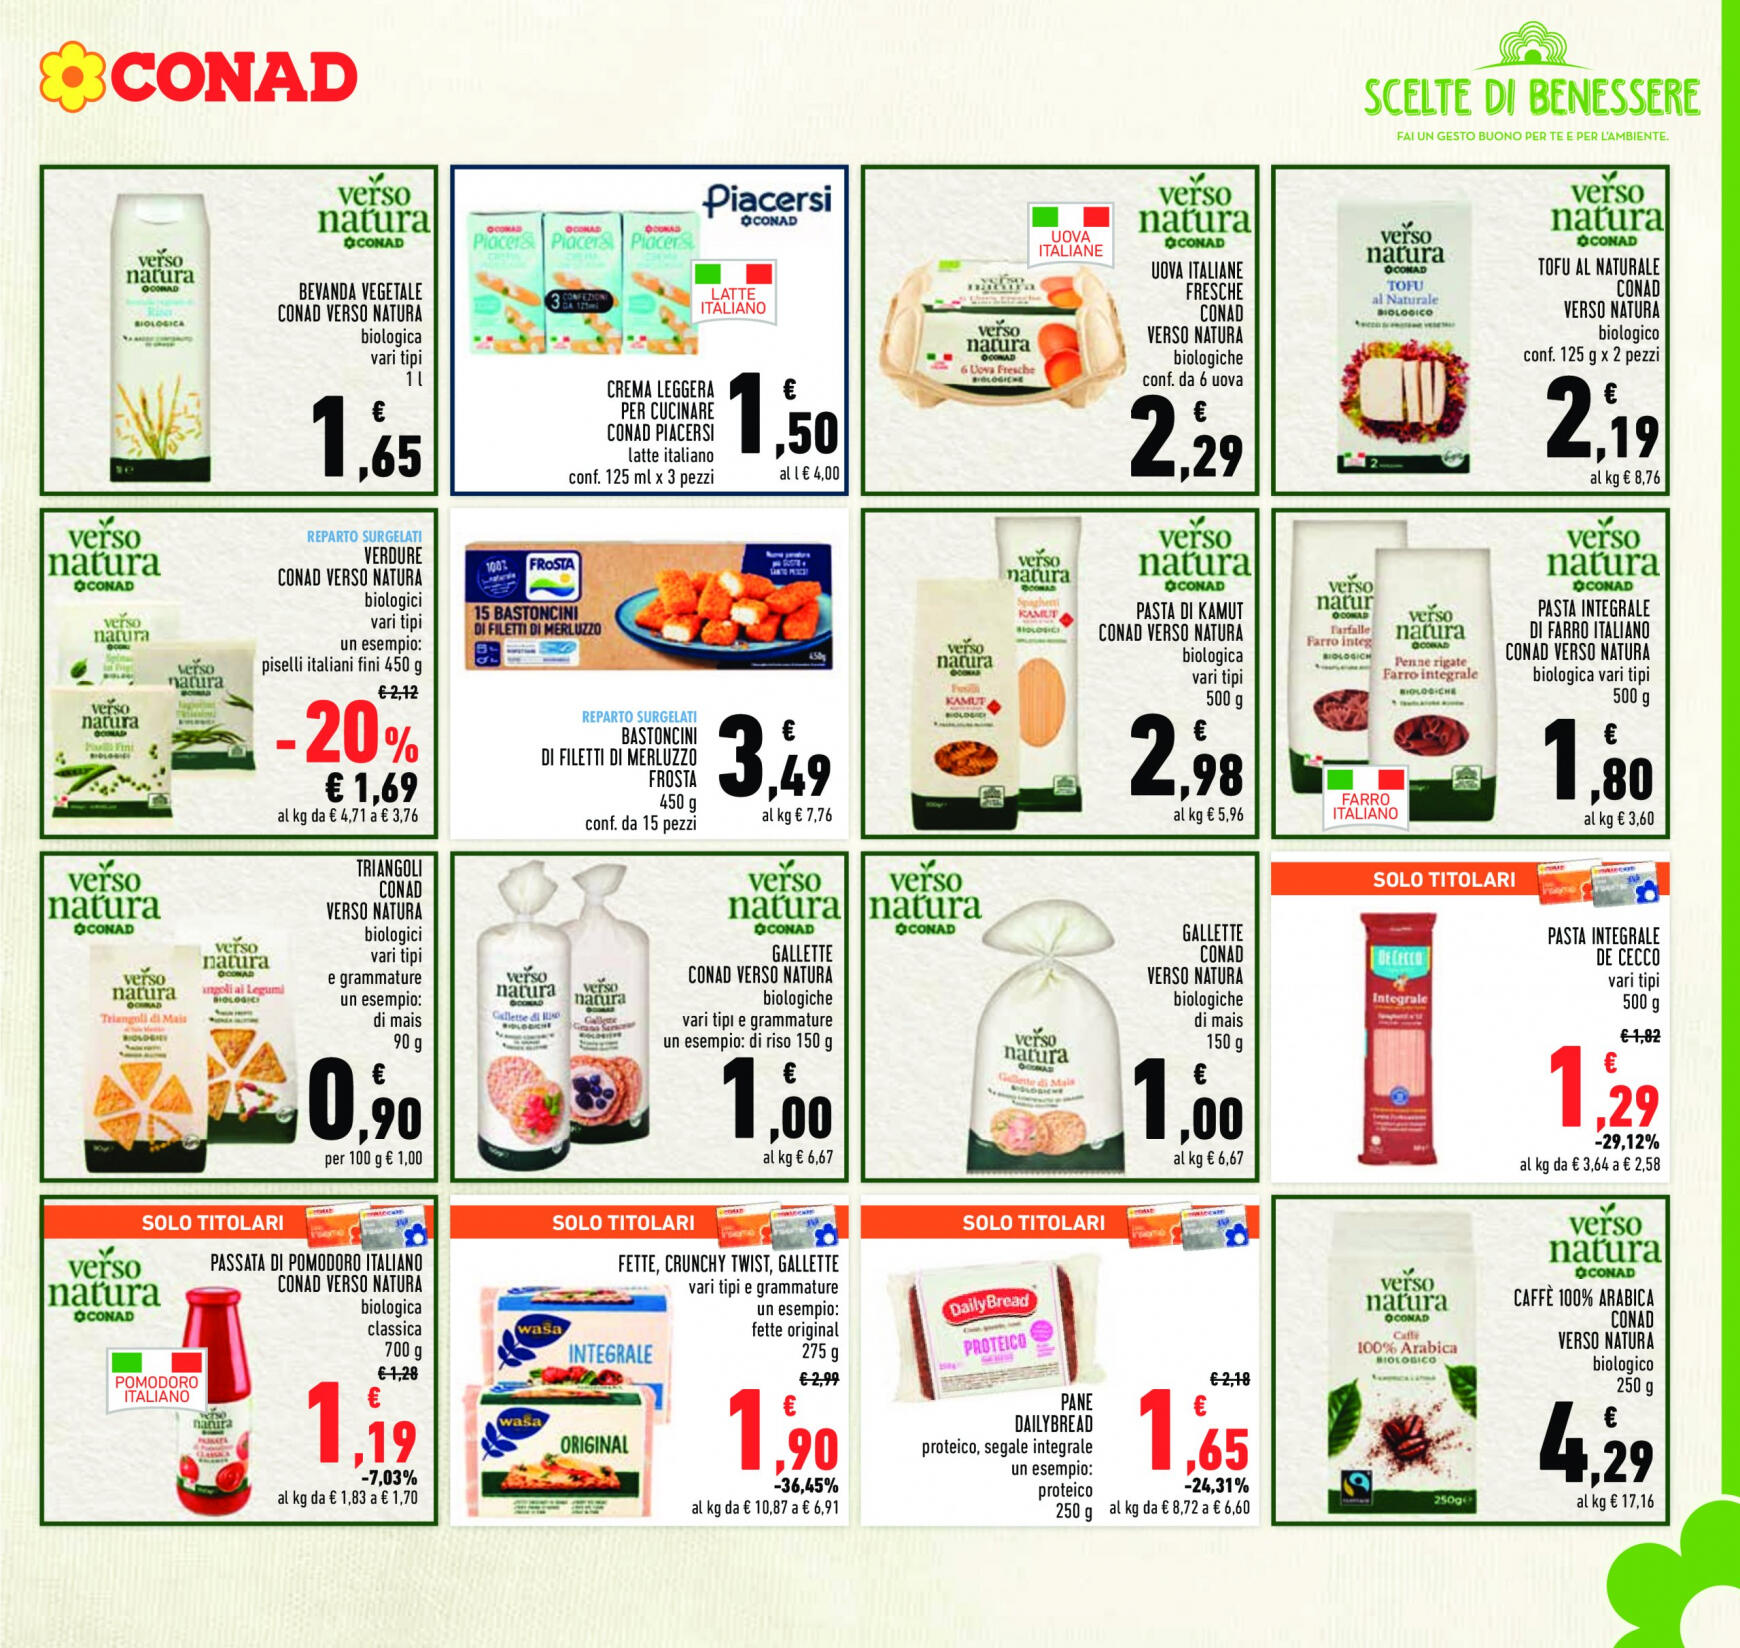 conad - Nuovo volantino Conad 12.06. - 25.06. - page: 7